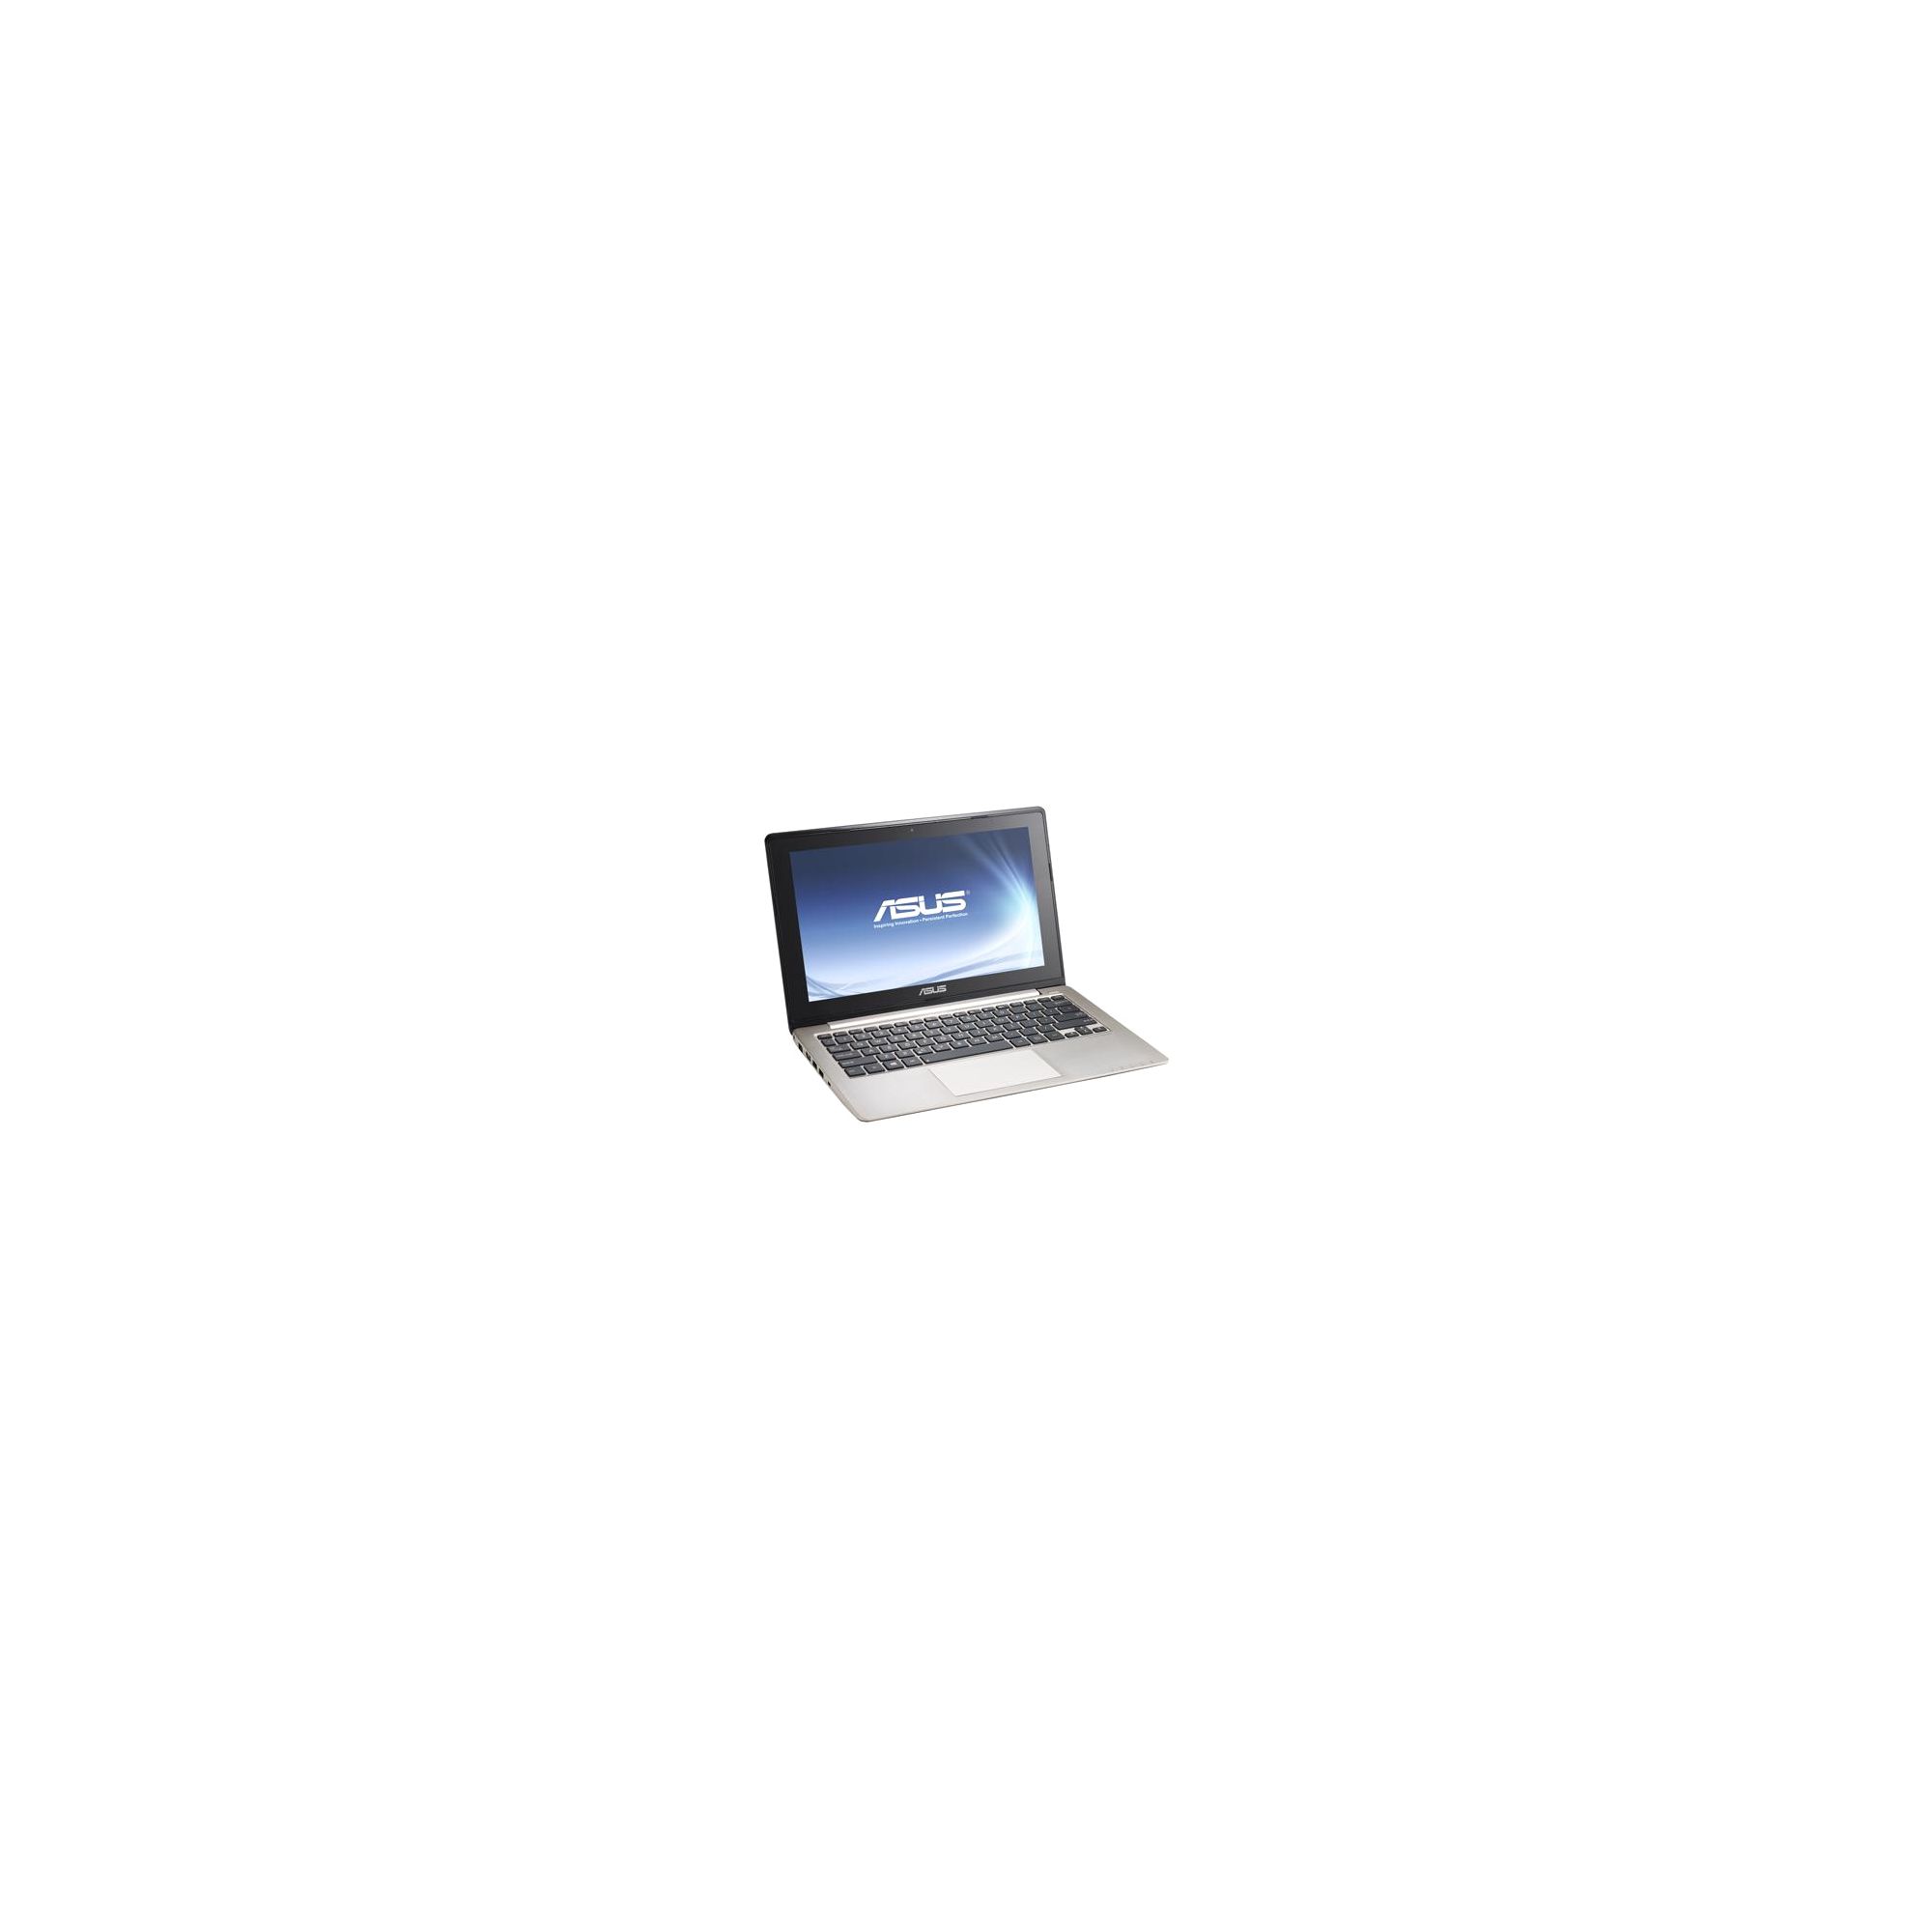 Asus S400CA VivoBook (14.1 inch Touchscreen) Ultrabook Core i3 (2365) 4GB 500GB WLAN Webcam Windows 8 (Intergrated Intel HD Graphics)